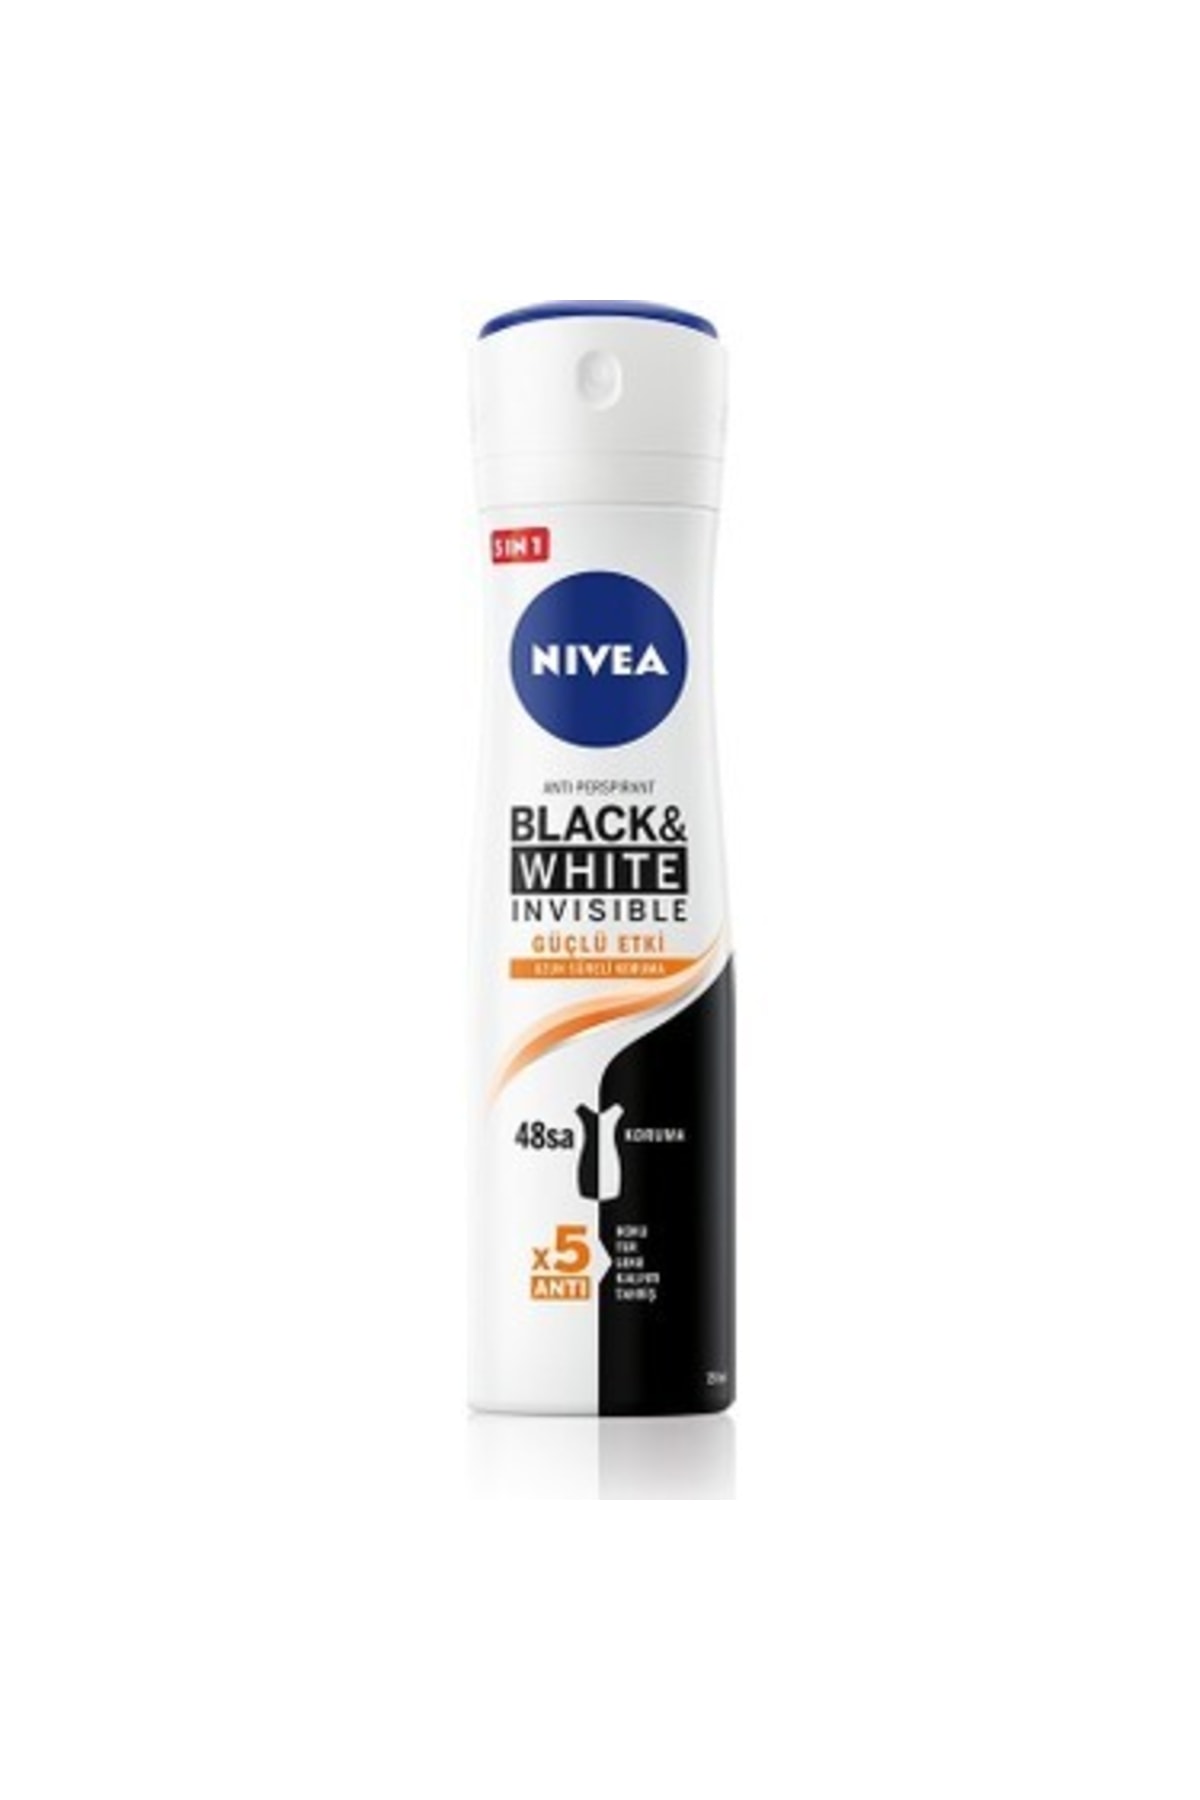 Nivea Deodorant Kadın Invisible Black&white Güçlü Etki 150 ml X 6 Adet